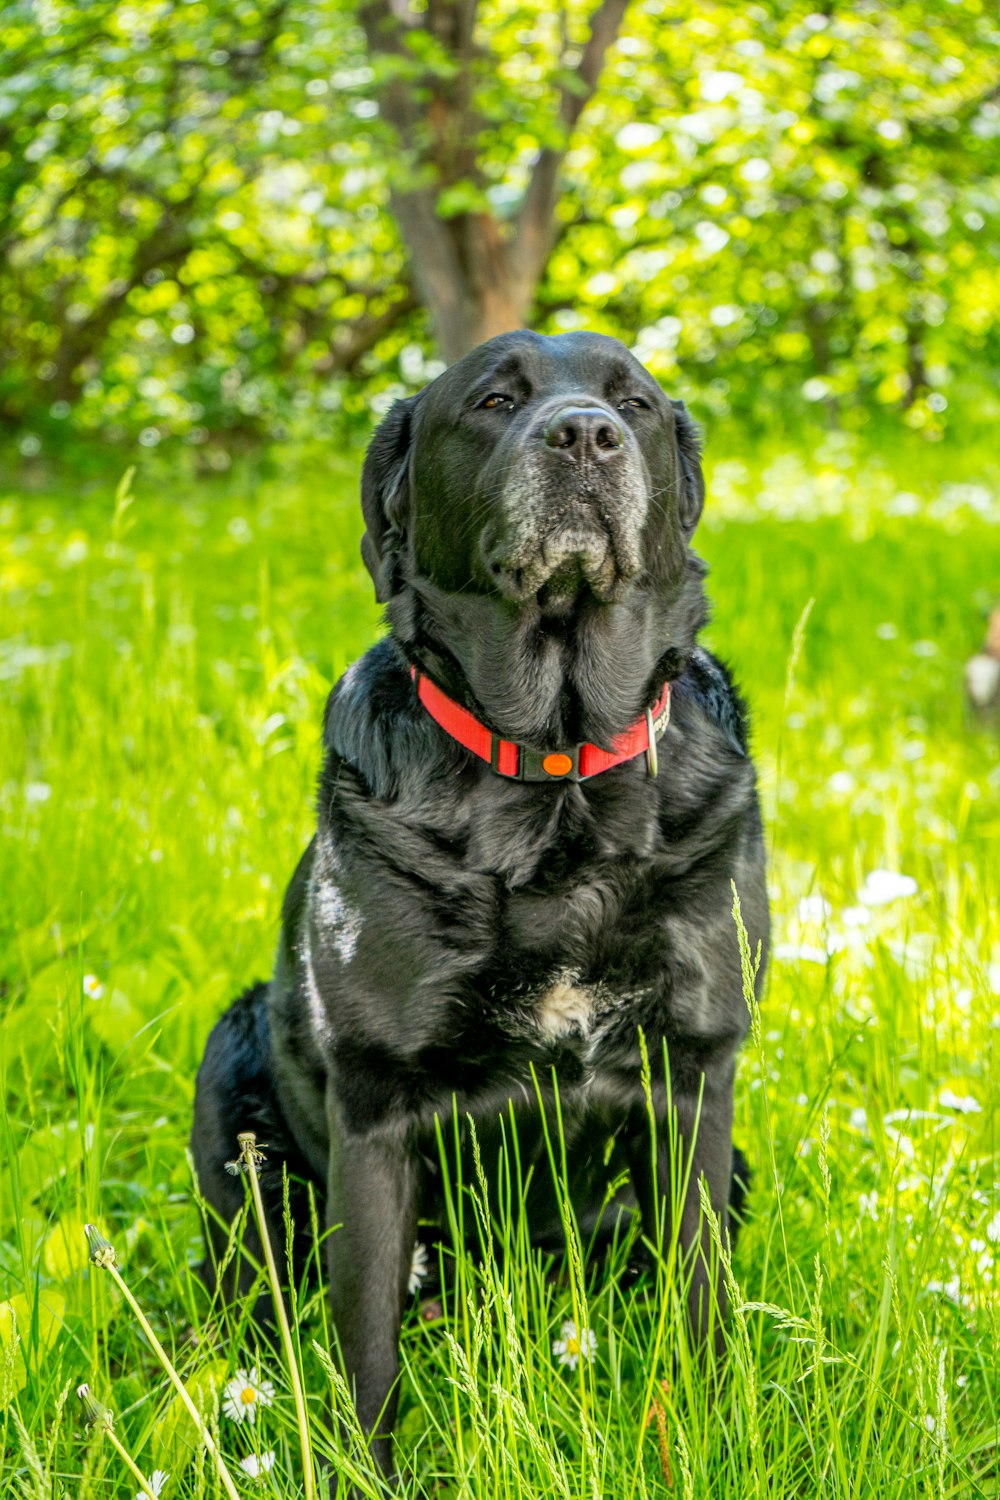 a black dog sitting in a grassy area